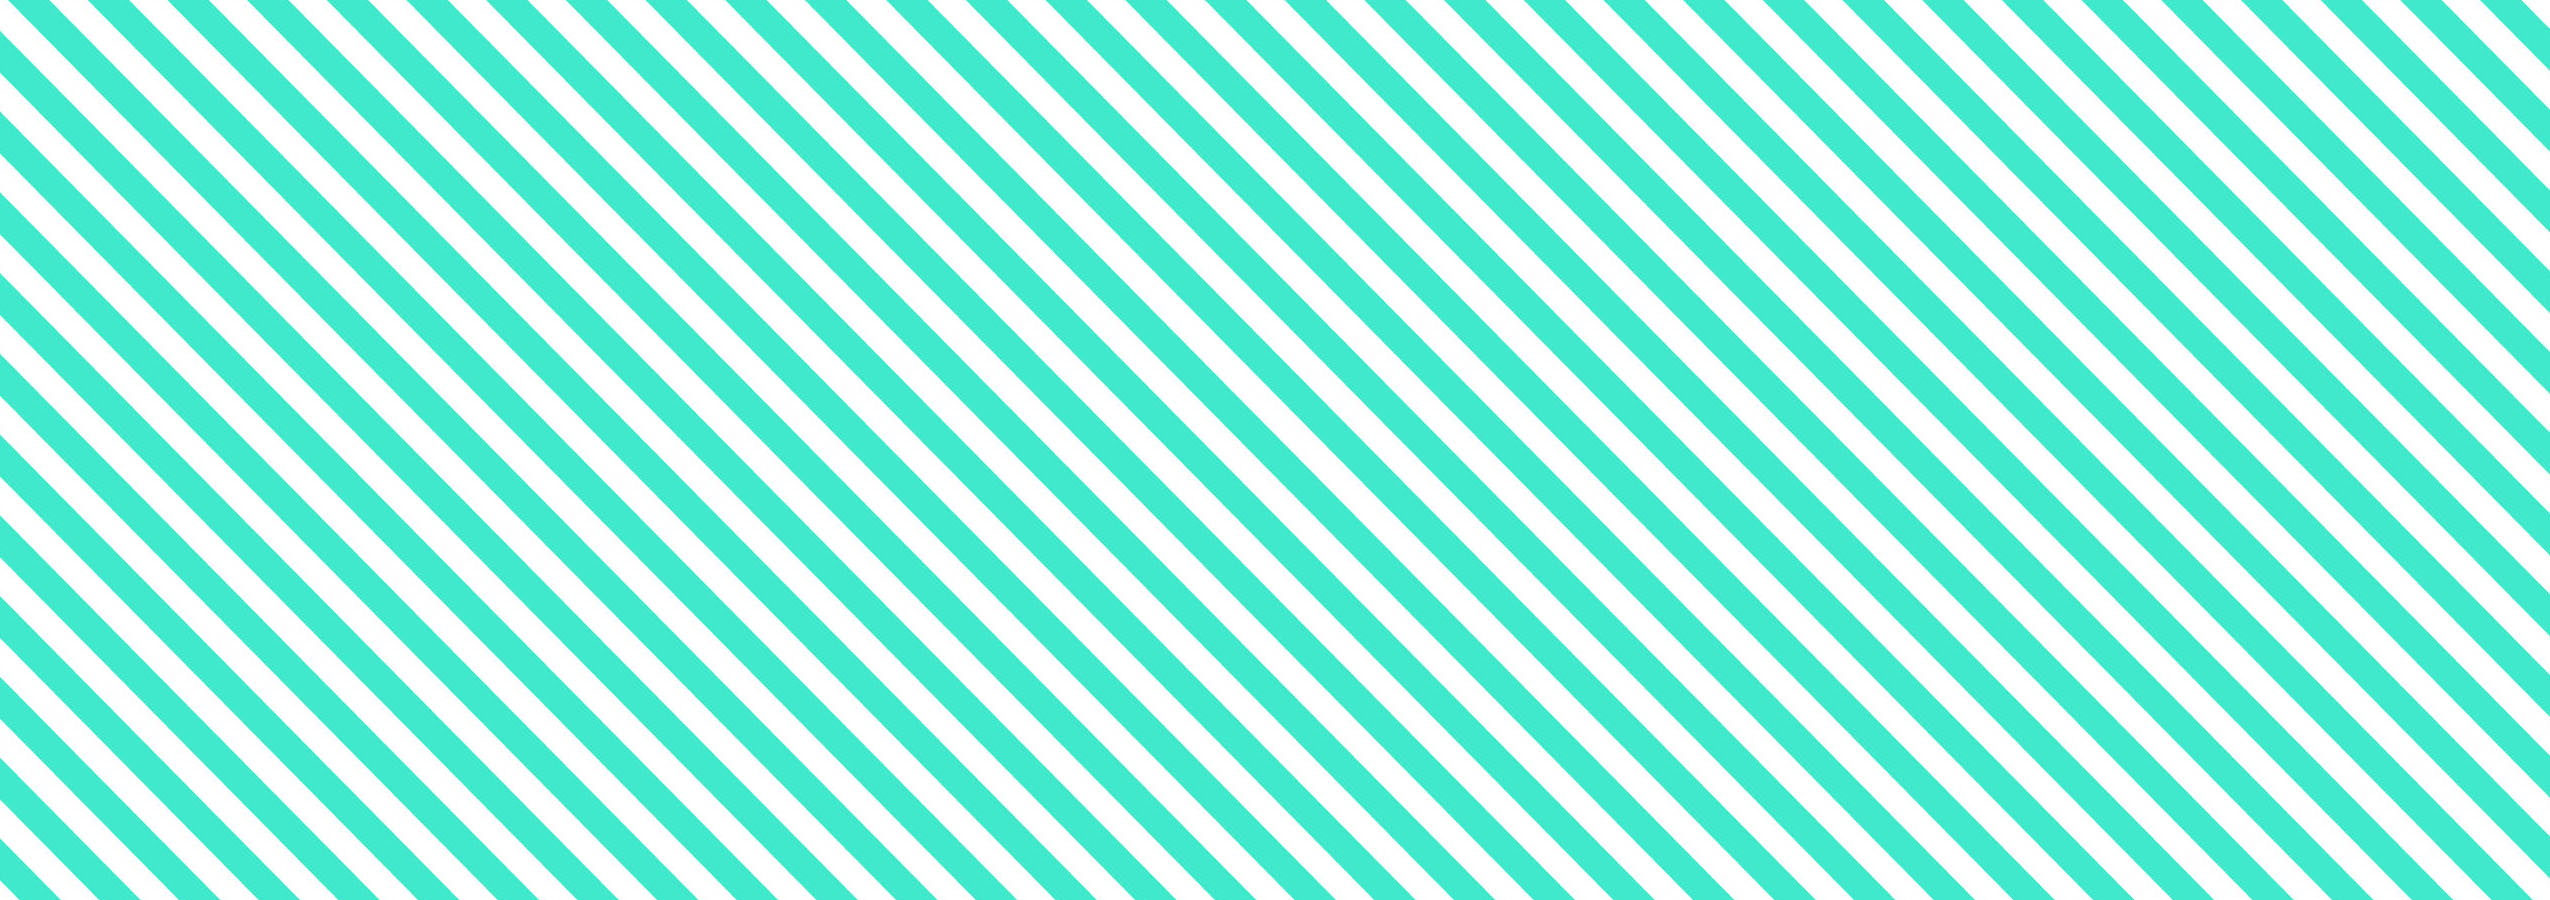 HQ Stripes Wallpapers | File 1013.07Kb